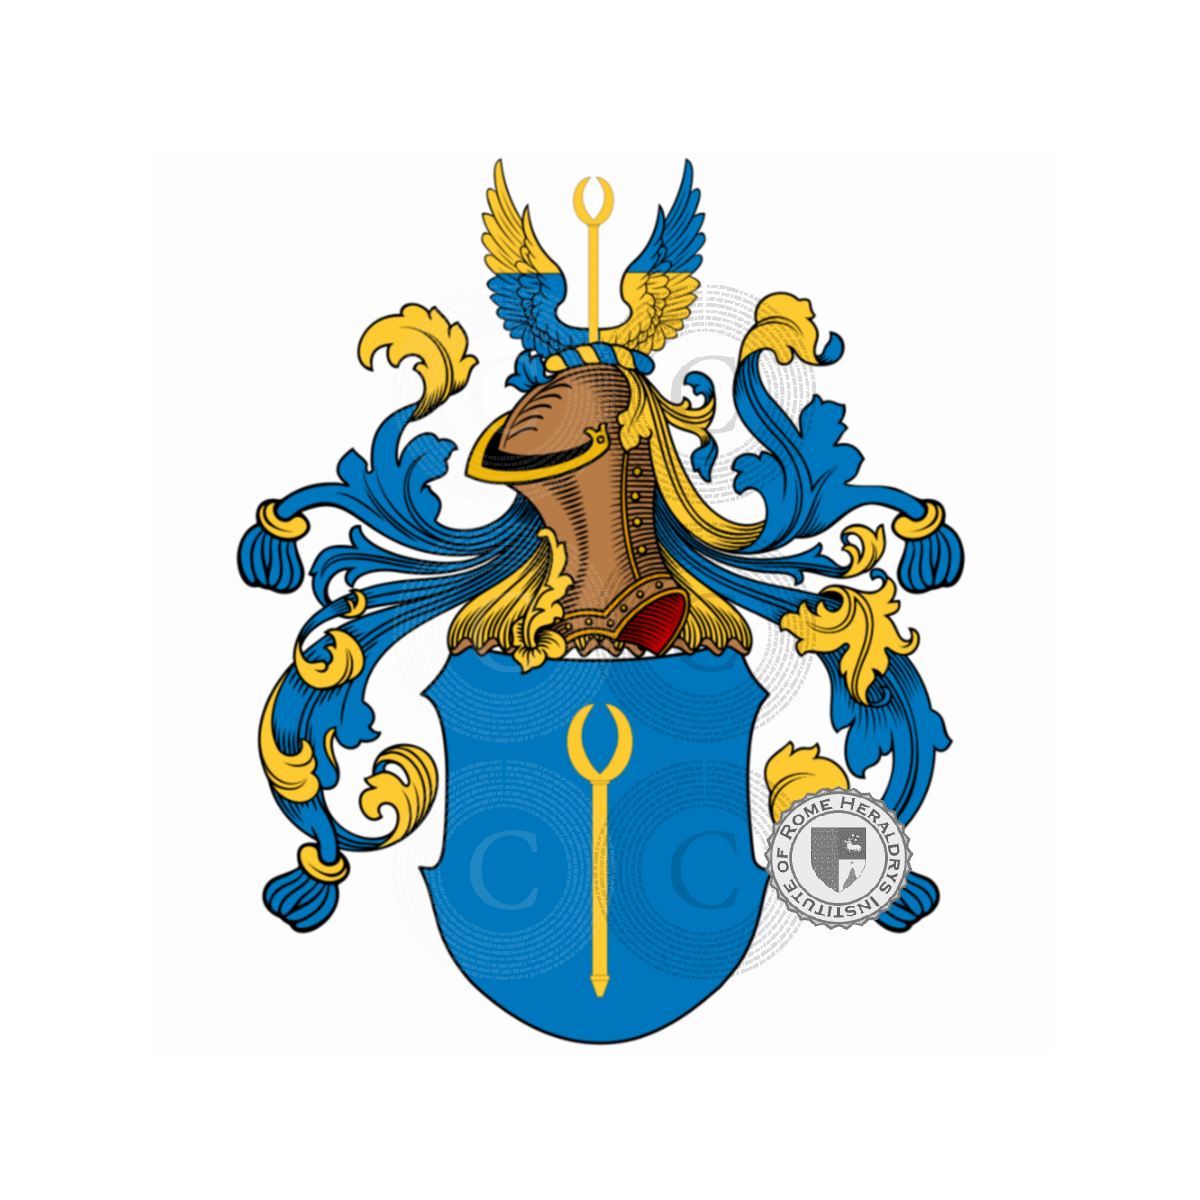 Wappen der FamiliePfahler, Pfadler,Pfähler